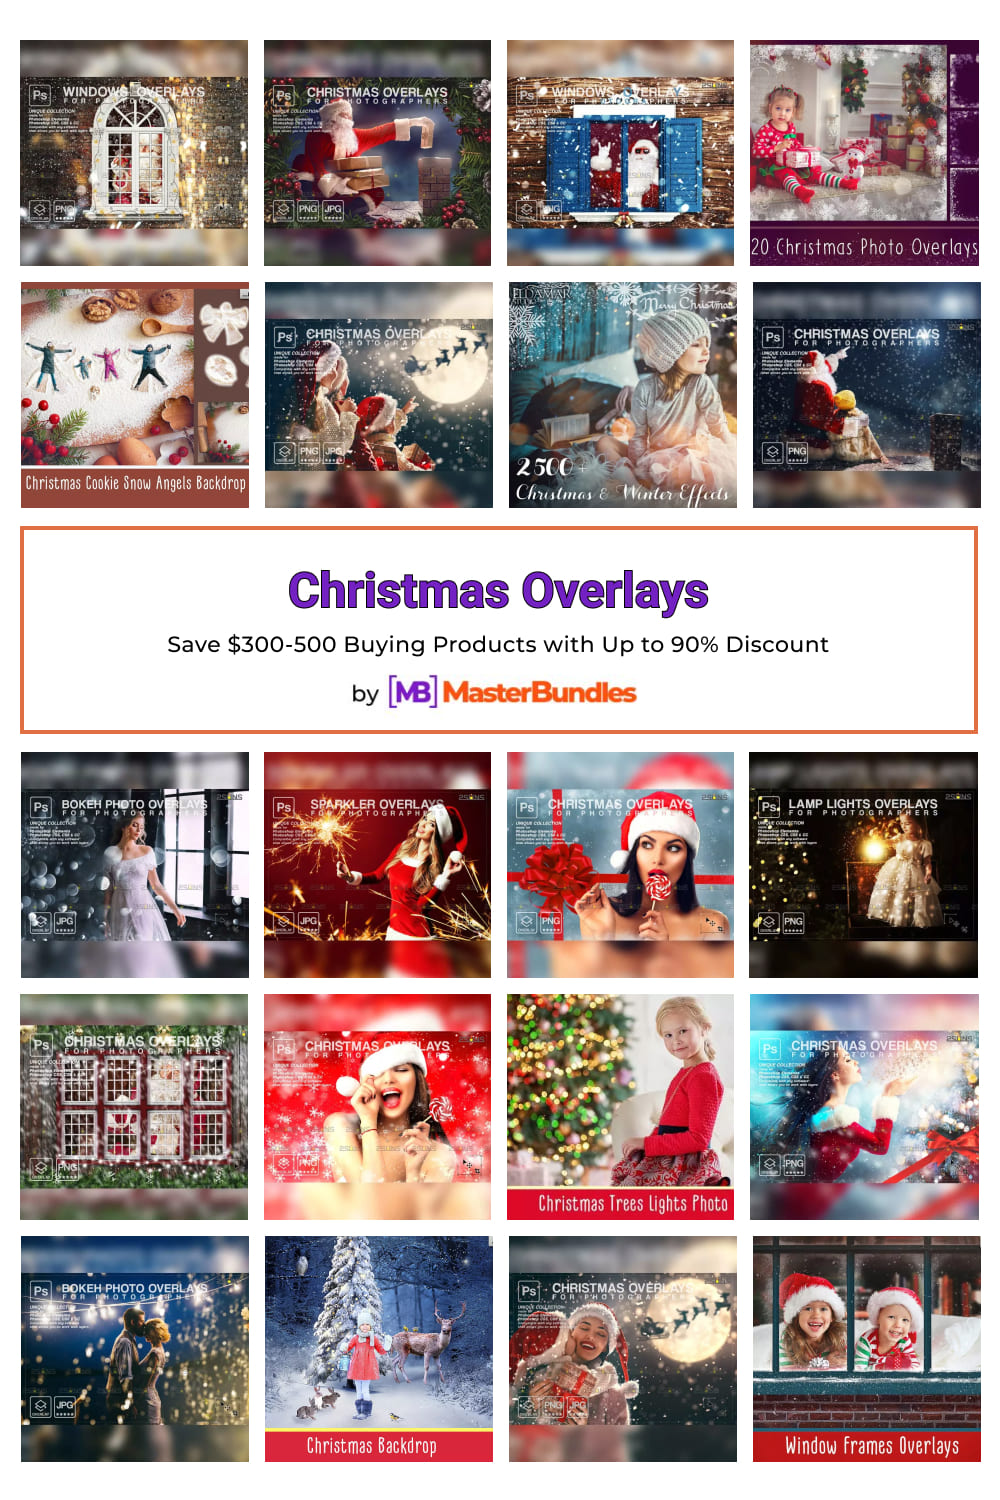 Christmas Overlays Pinterest image.